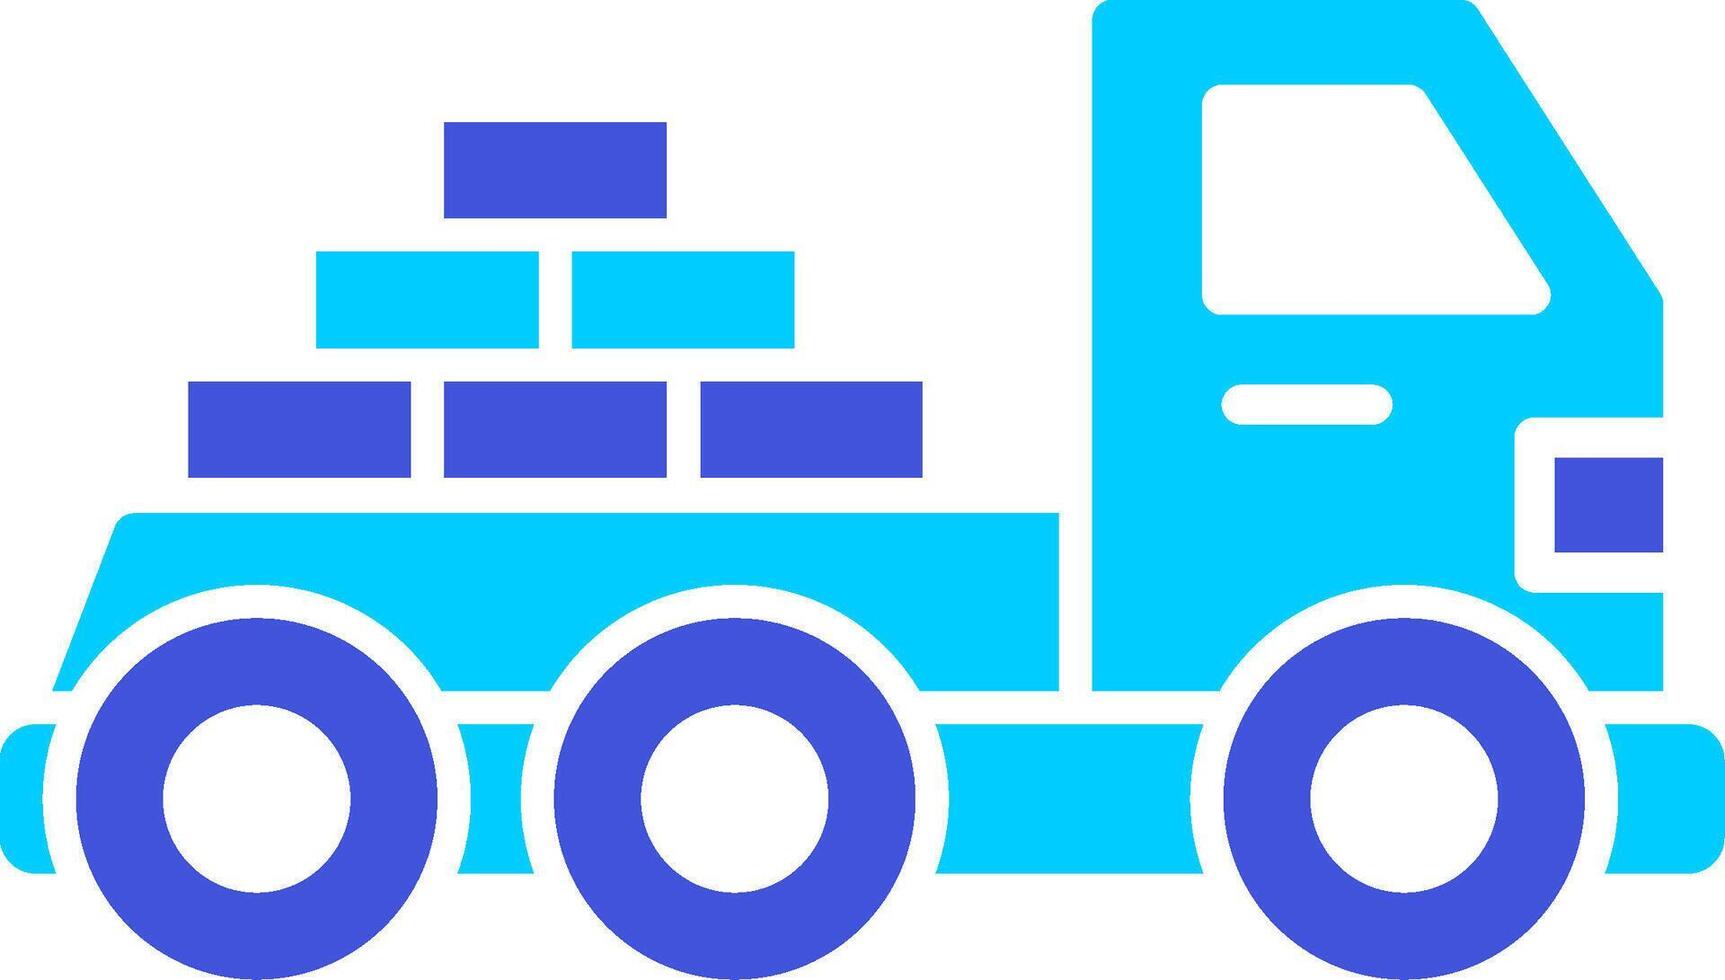 Logistics Delivery Truck Vecto Icon vector